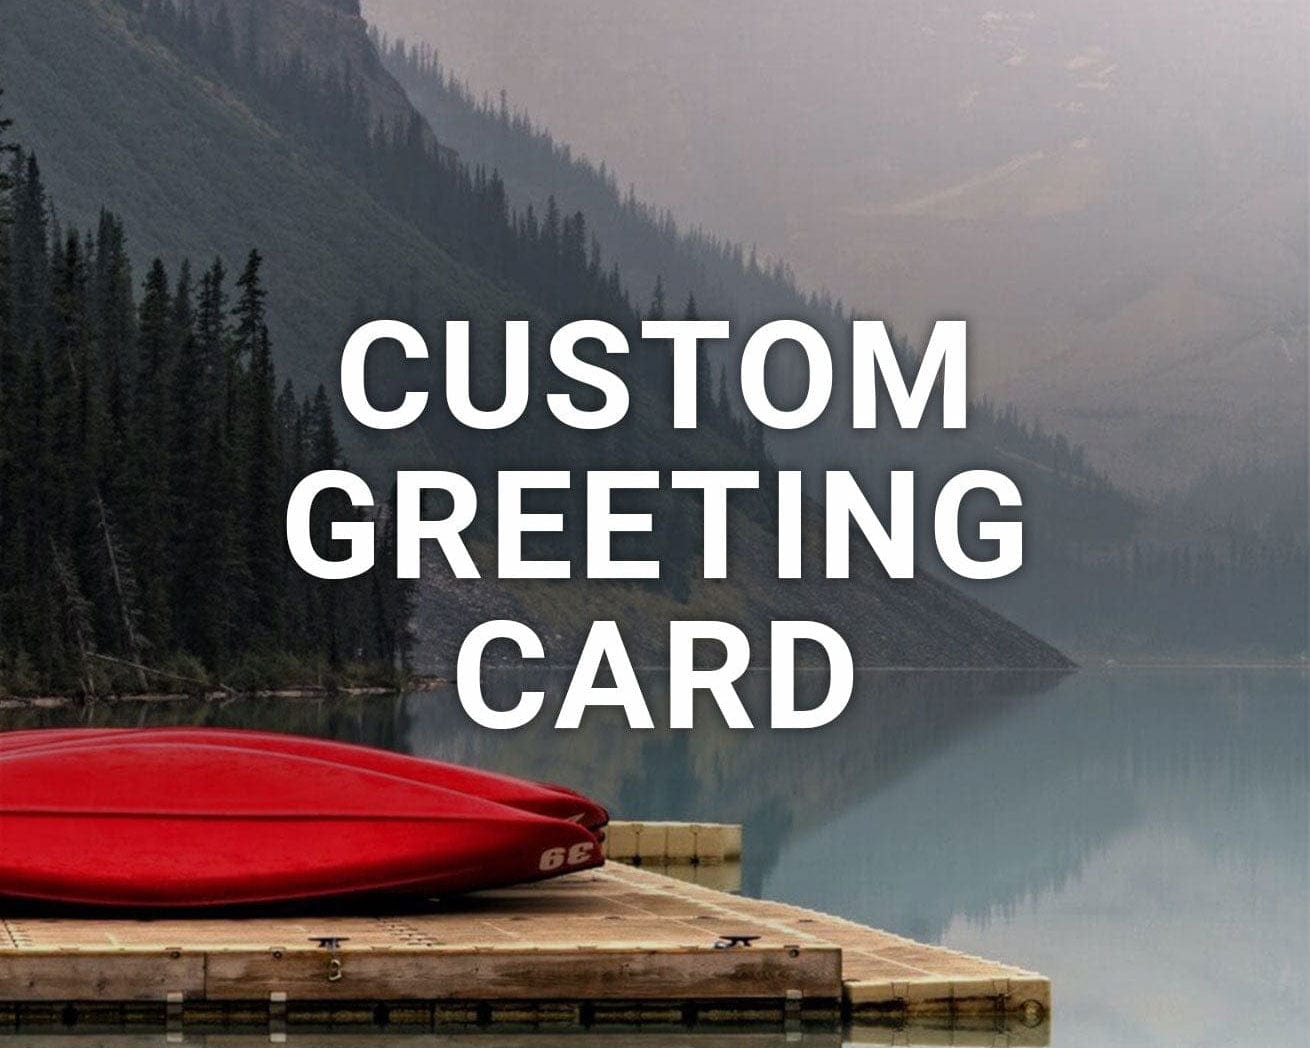 Custom greeting card main